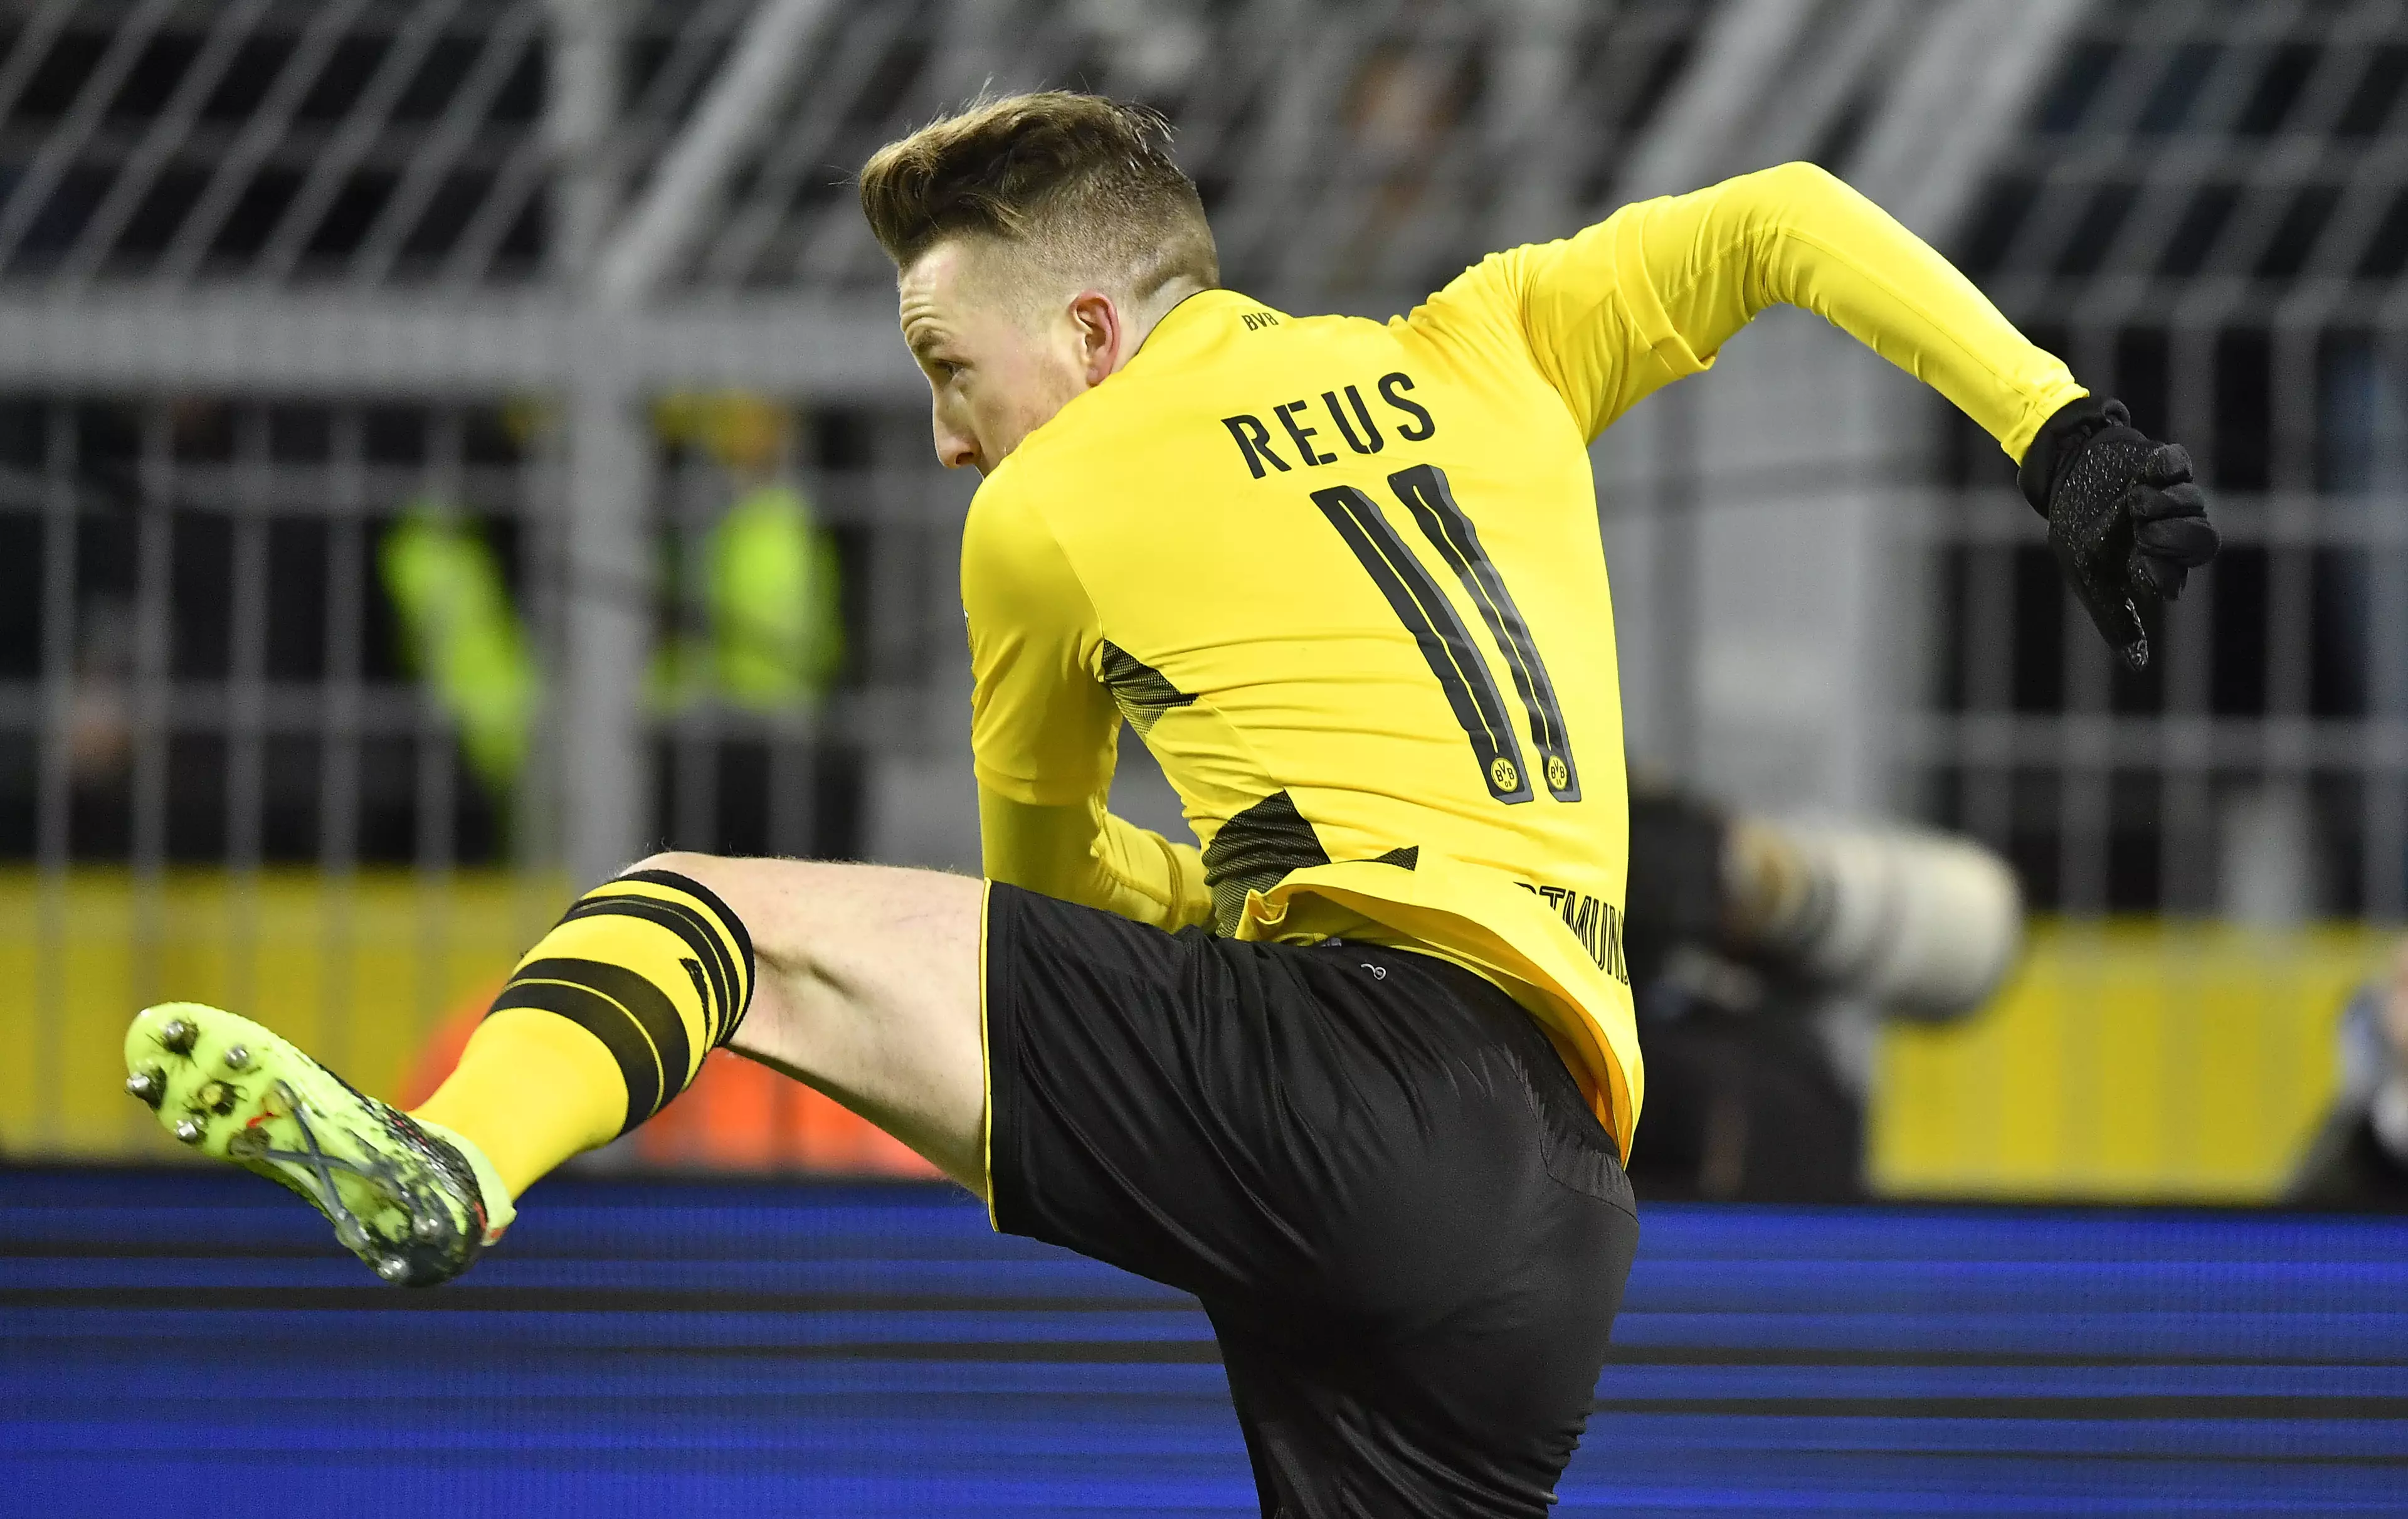 Reus celebrates scoring a goal. Image: PA